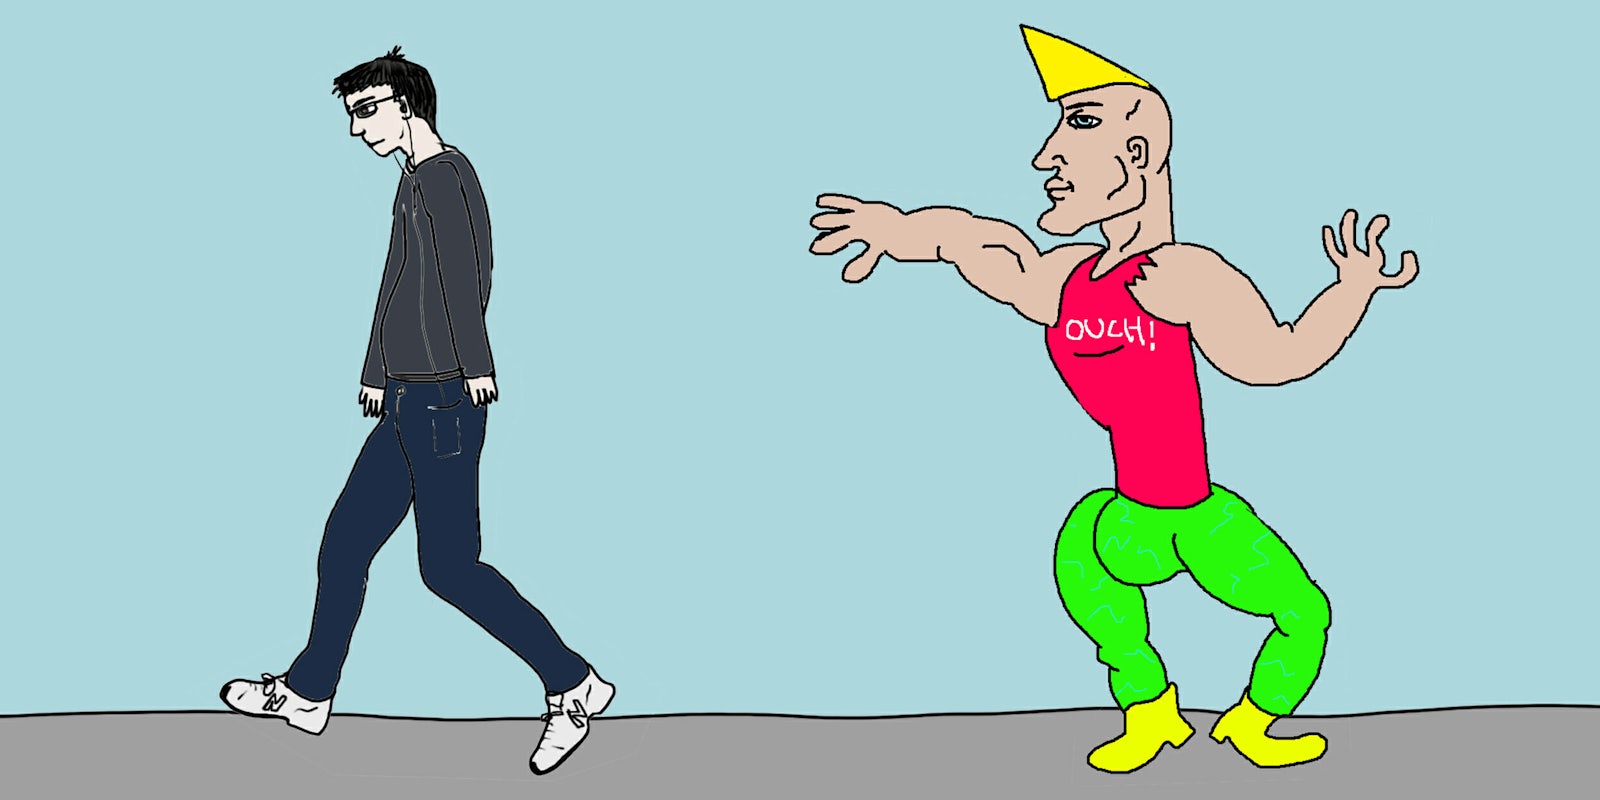 Chad meme: Virgin Walk vs. Chad Stride